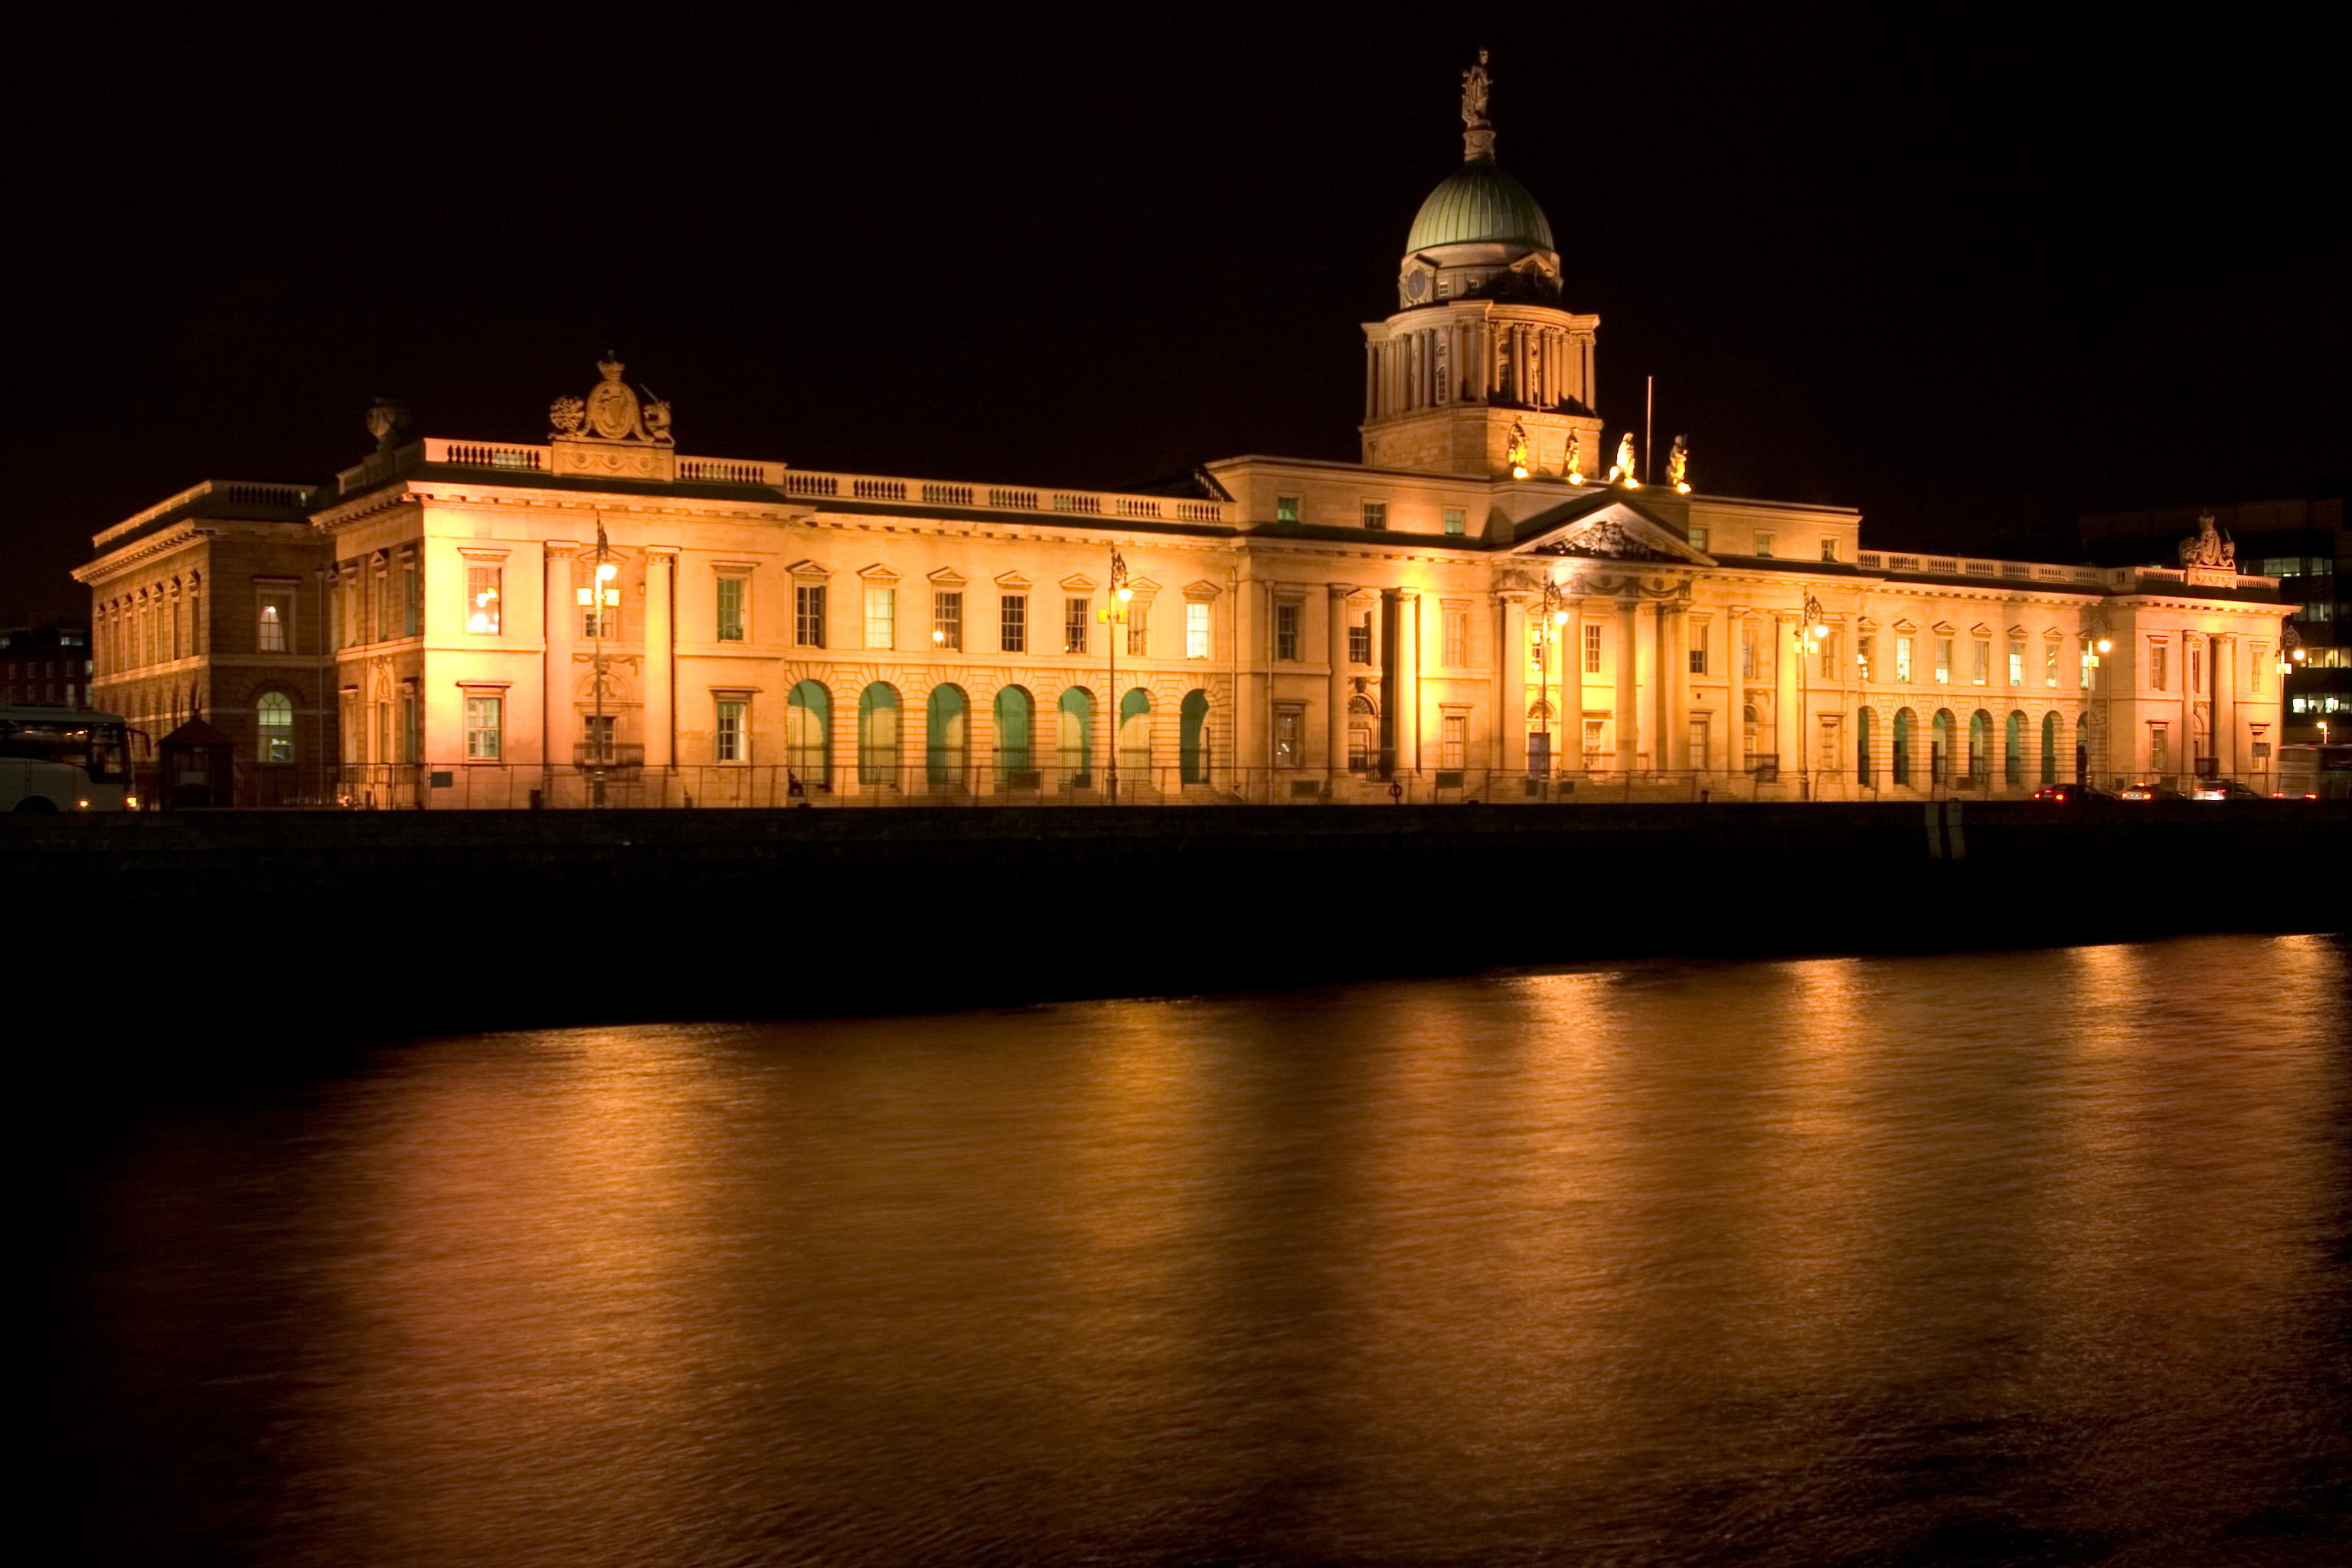 File:Dublin Custom House at night 2.jpg - Wikimedia Commons